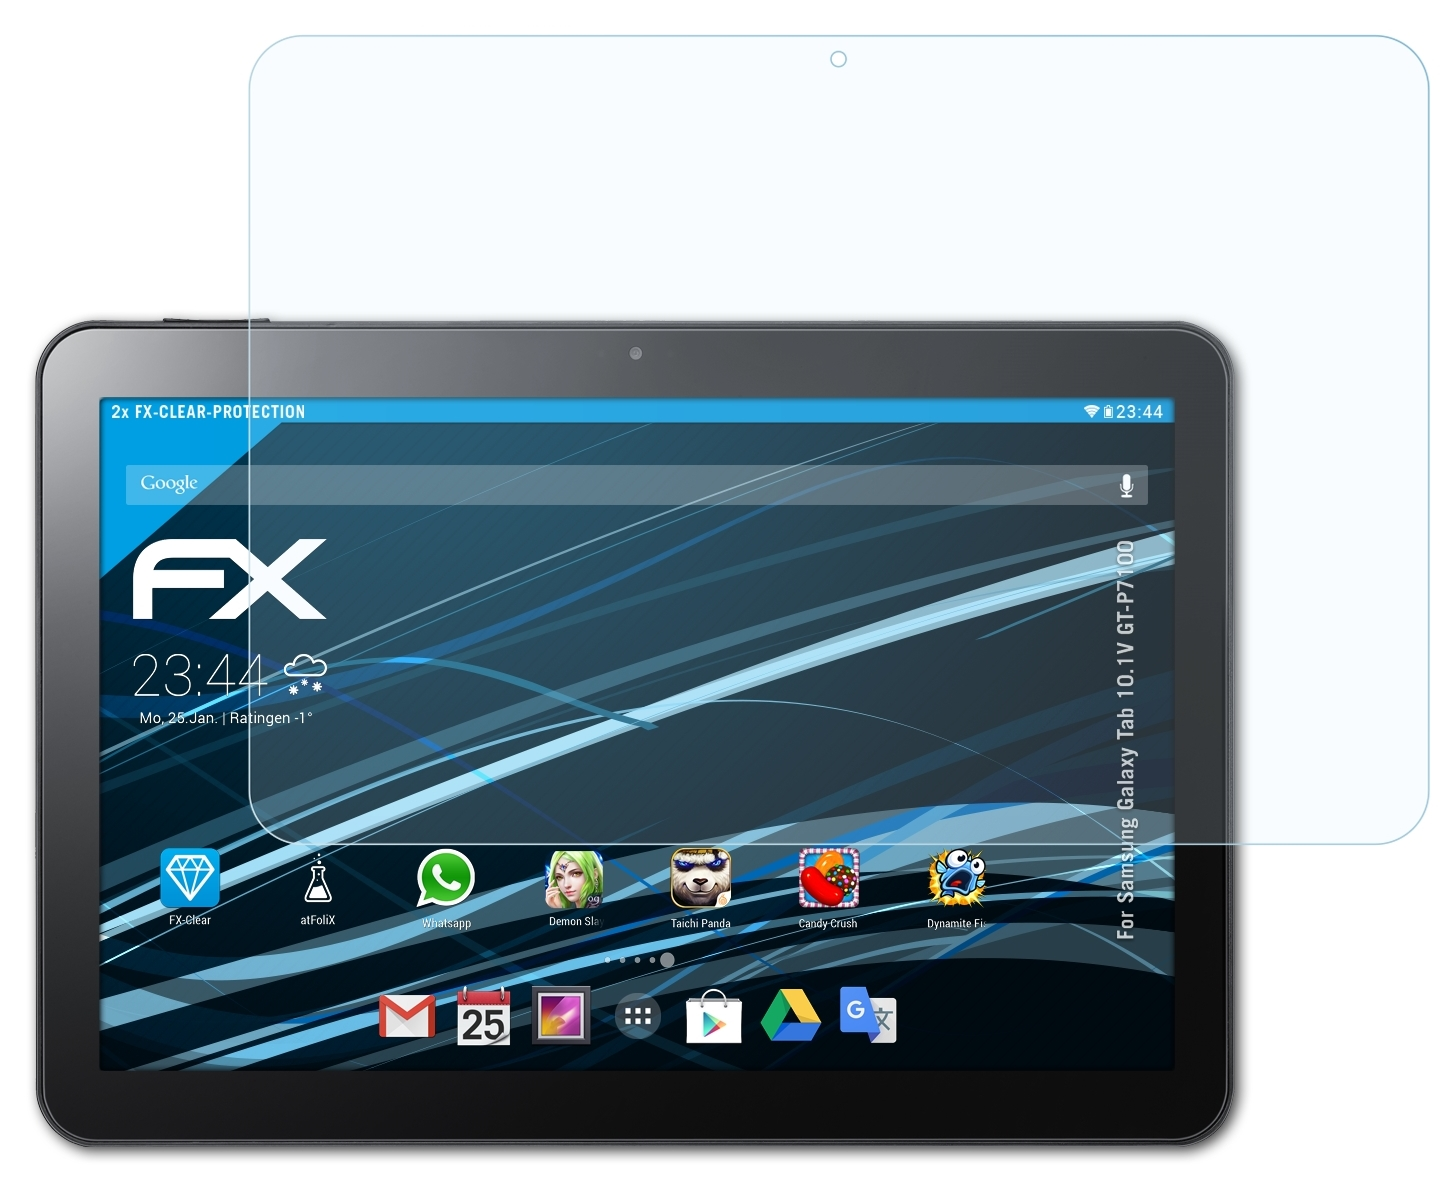 Displayschutz(für Tab 10.1V ATFOLIX Galaxy 2x Samsung (GT-P7100)) FX-Clear